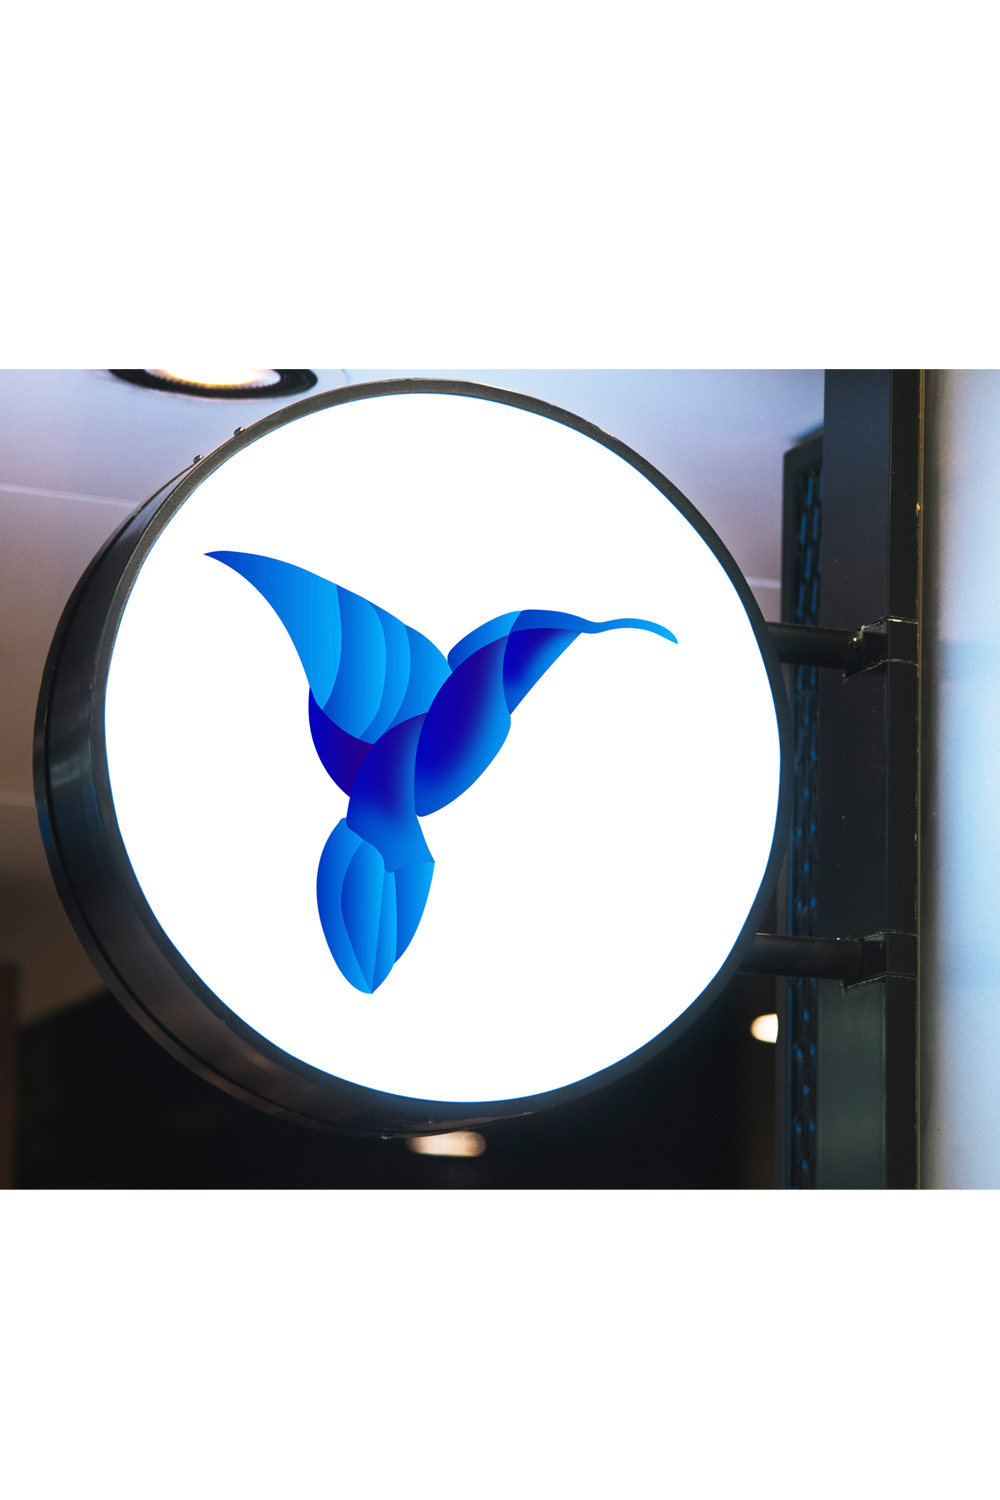 Bird logo design with gradient blue color pinterest preview image.